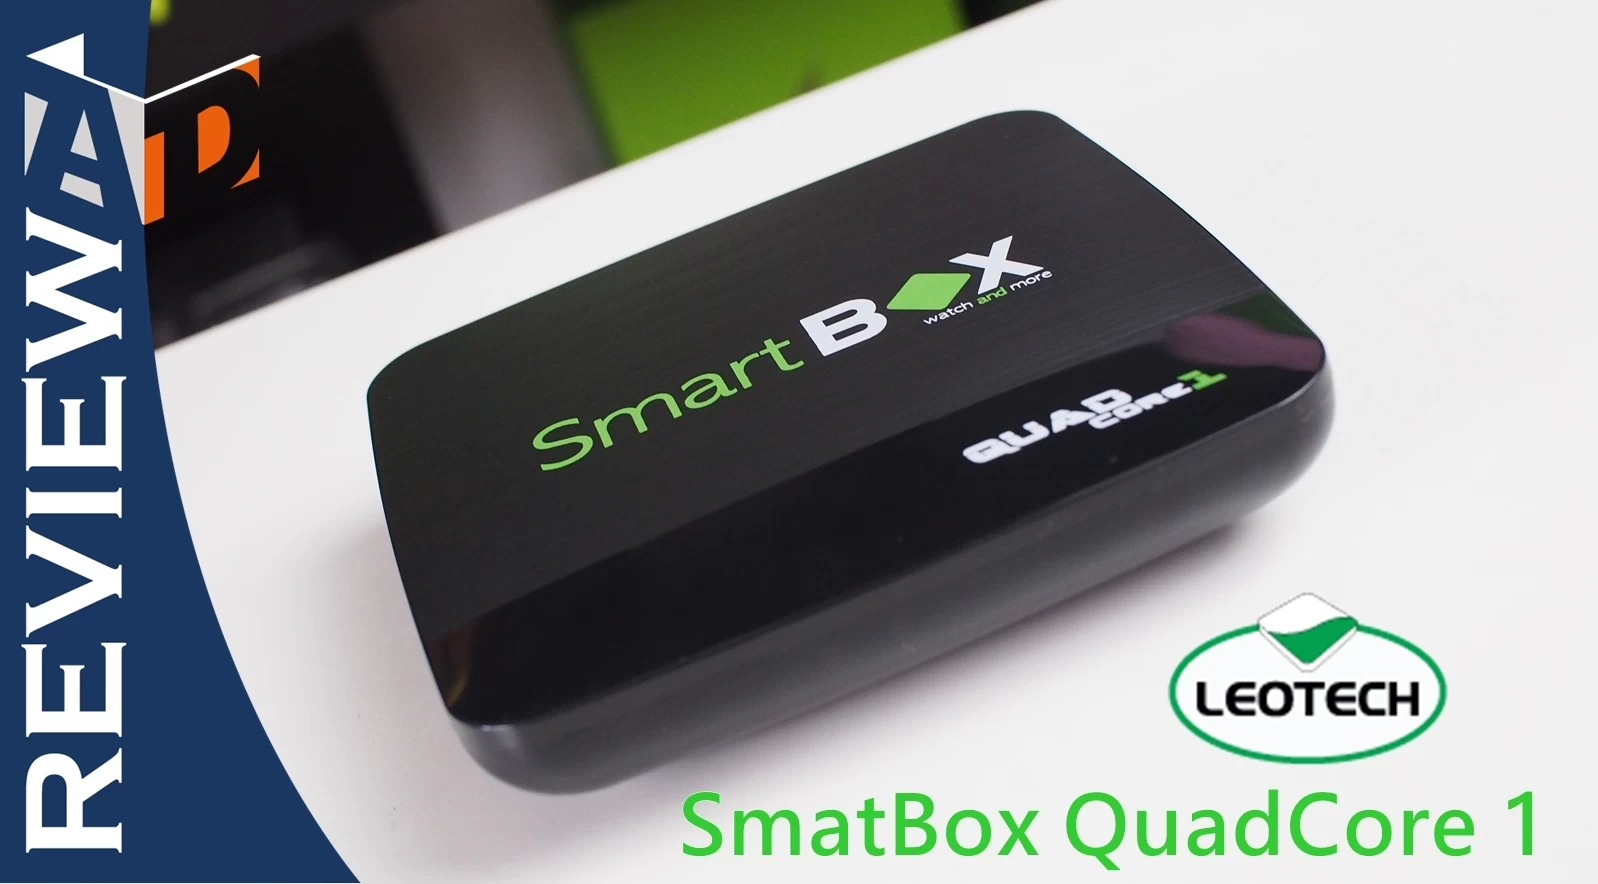 review Leotech SmartBox Quadcore 1 | Android box | รีวิว SmartBox Quadcore1 กล่องแอนดรอยด์ทีวีแบรนด์ไทย มาใหม่ในซีพียูที่แรงขึ้น